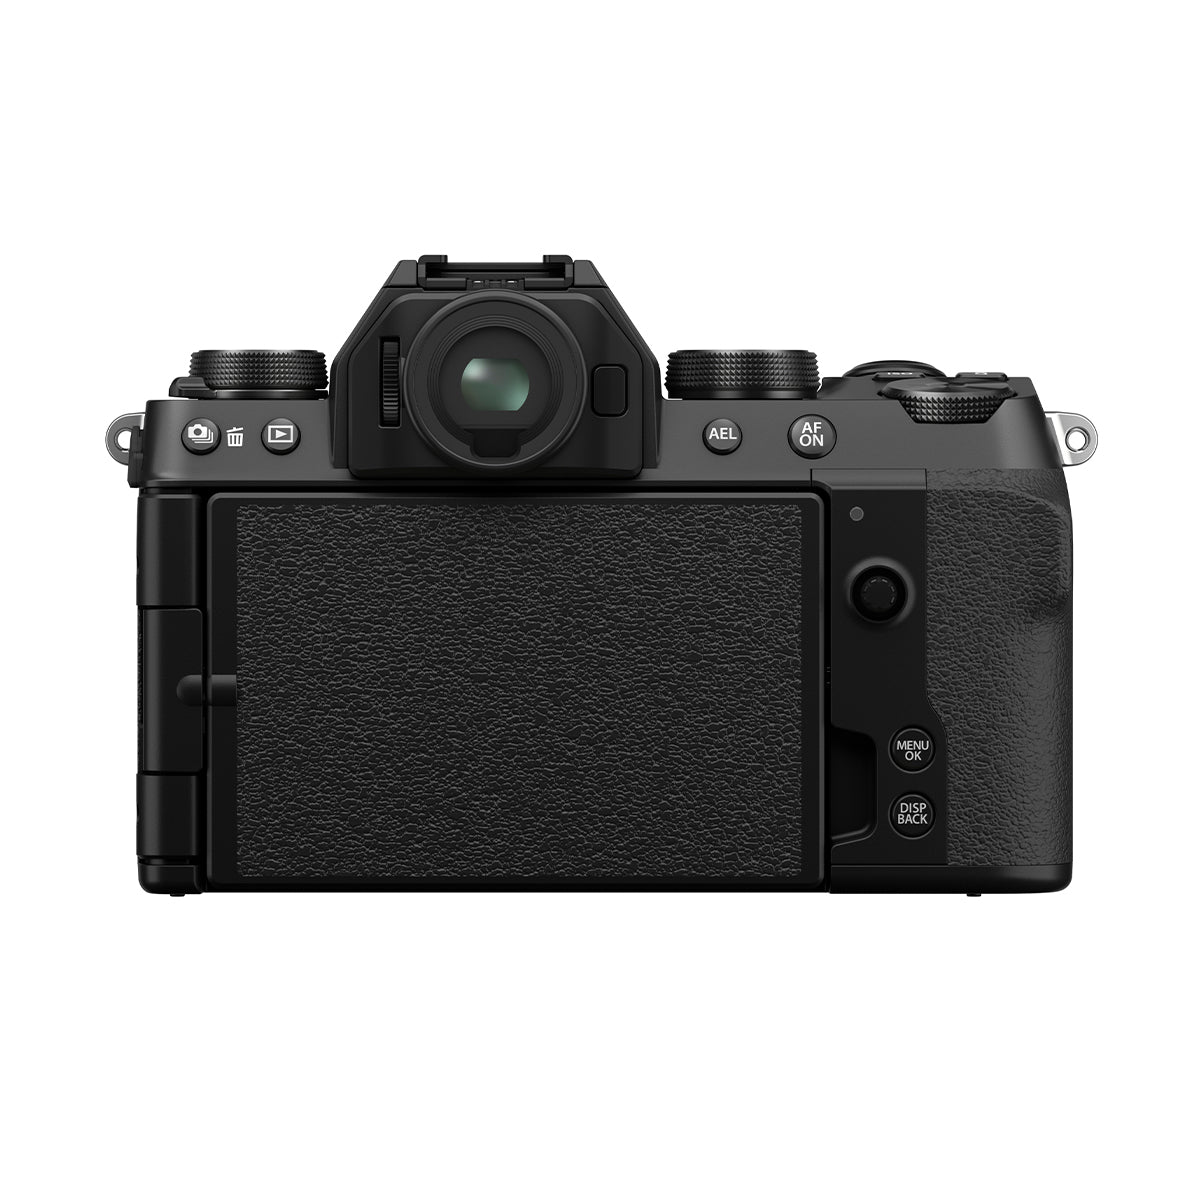 Fujifilm X-S10 Mirrorless Body with XF 16-80mm Lens Kit